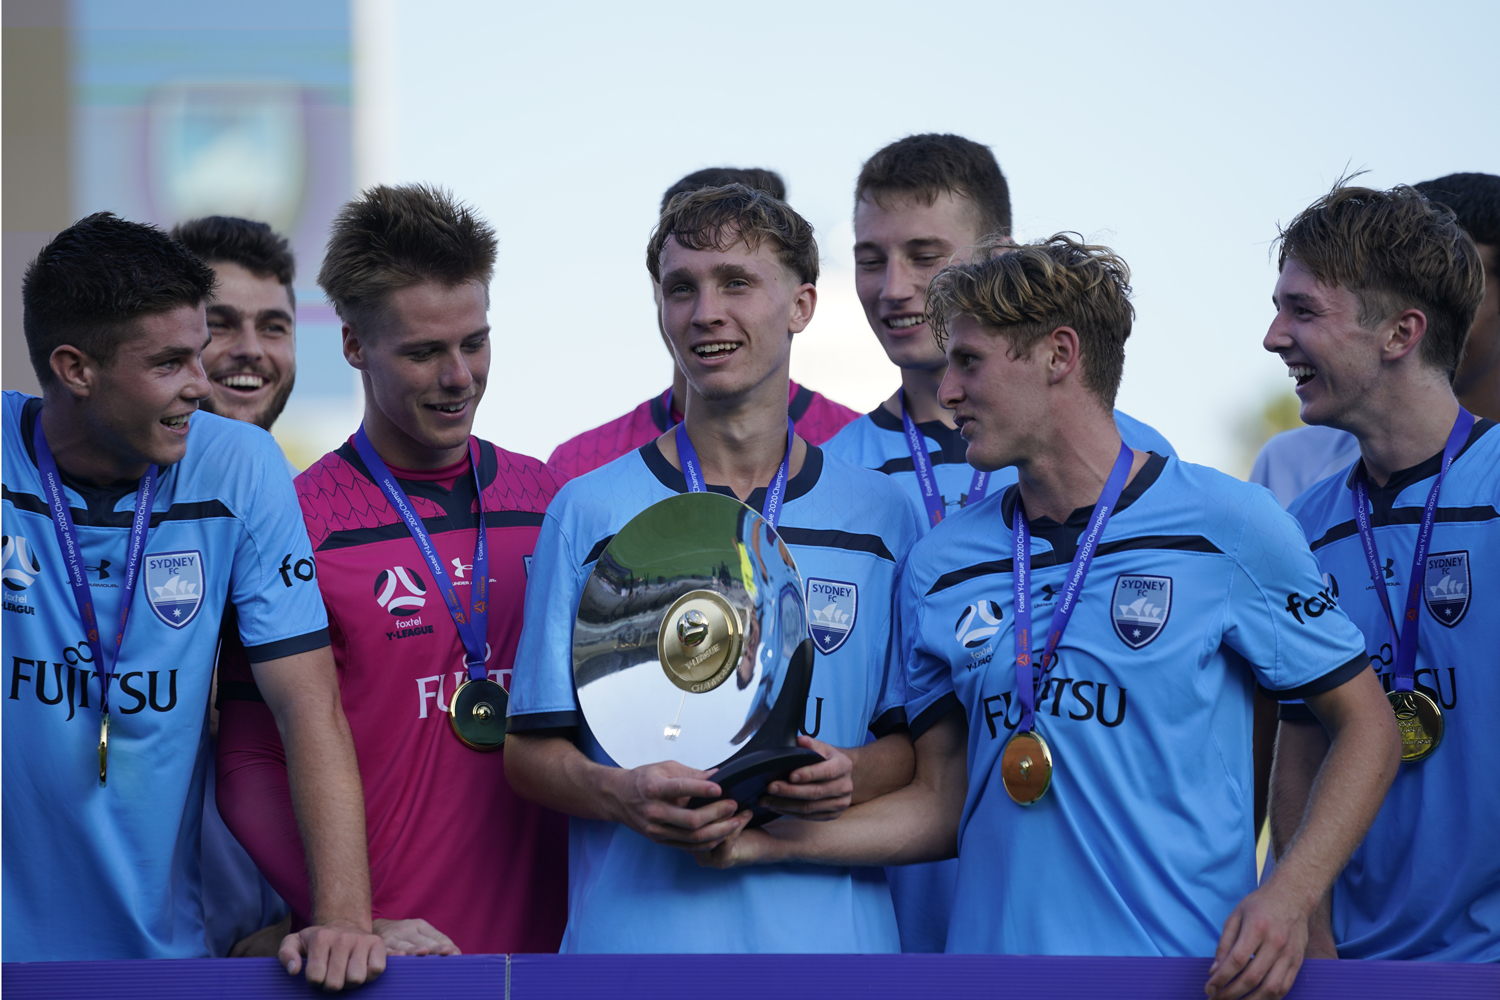 Sydney FC Foxtel Youth League Champions 2019-20